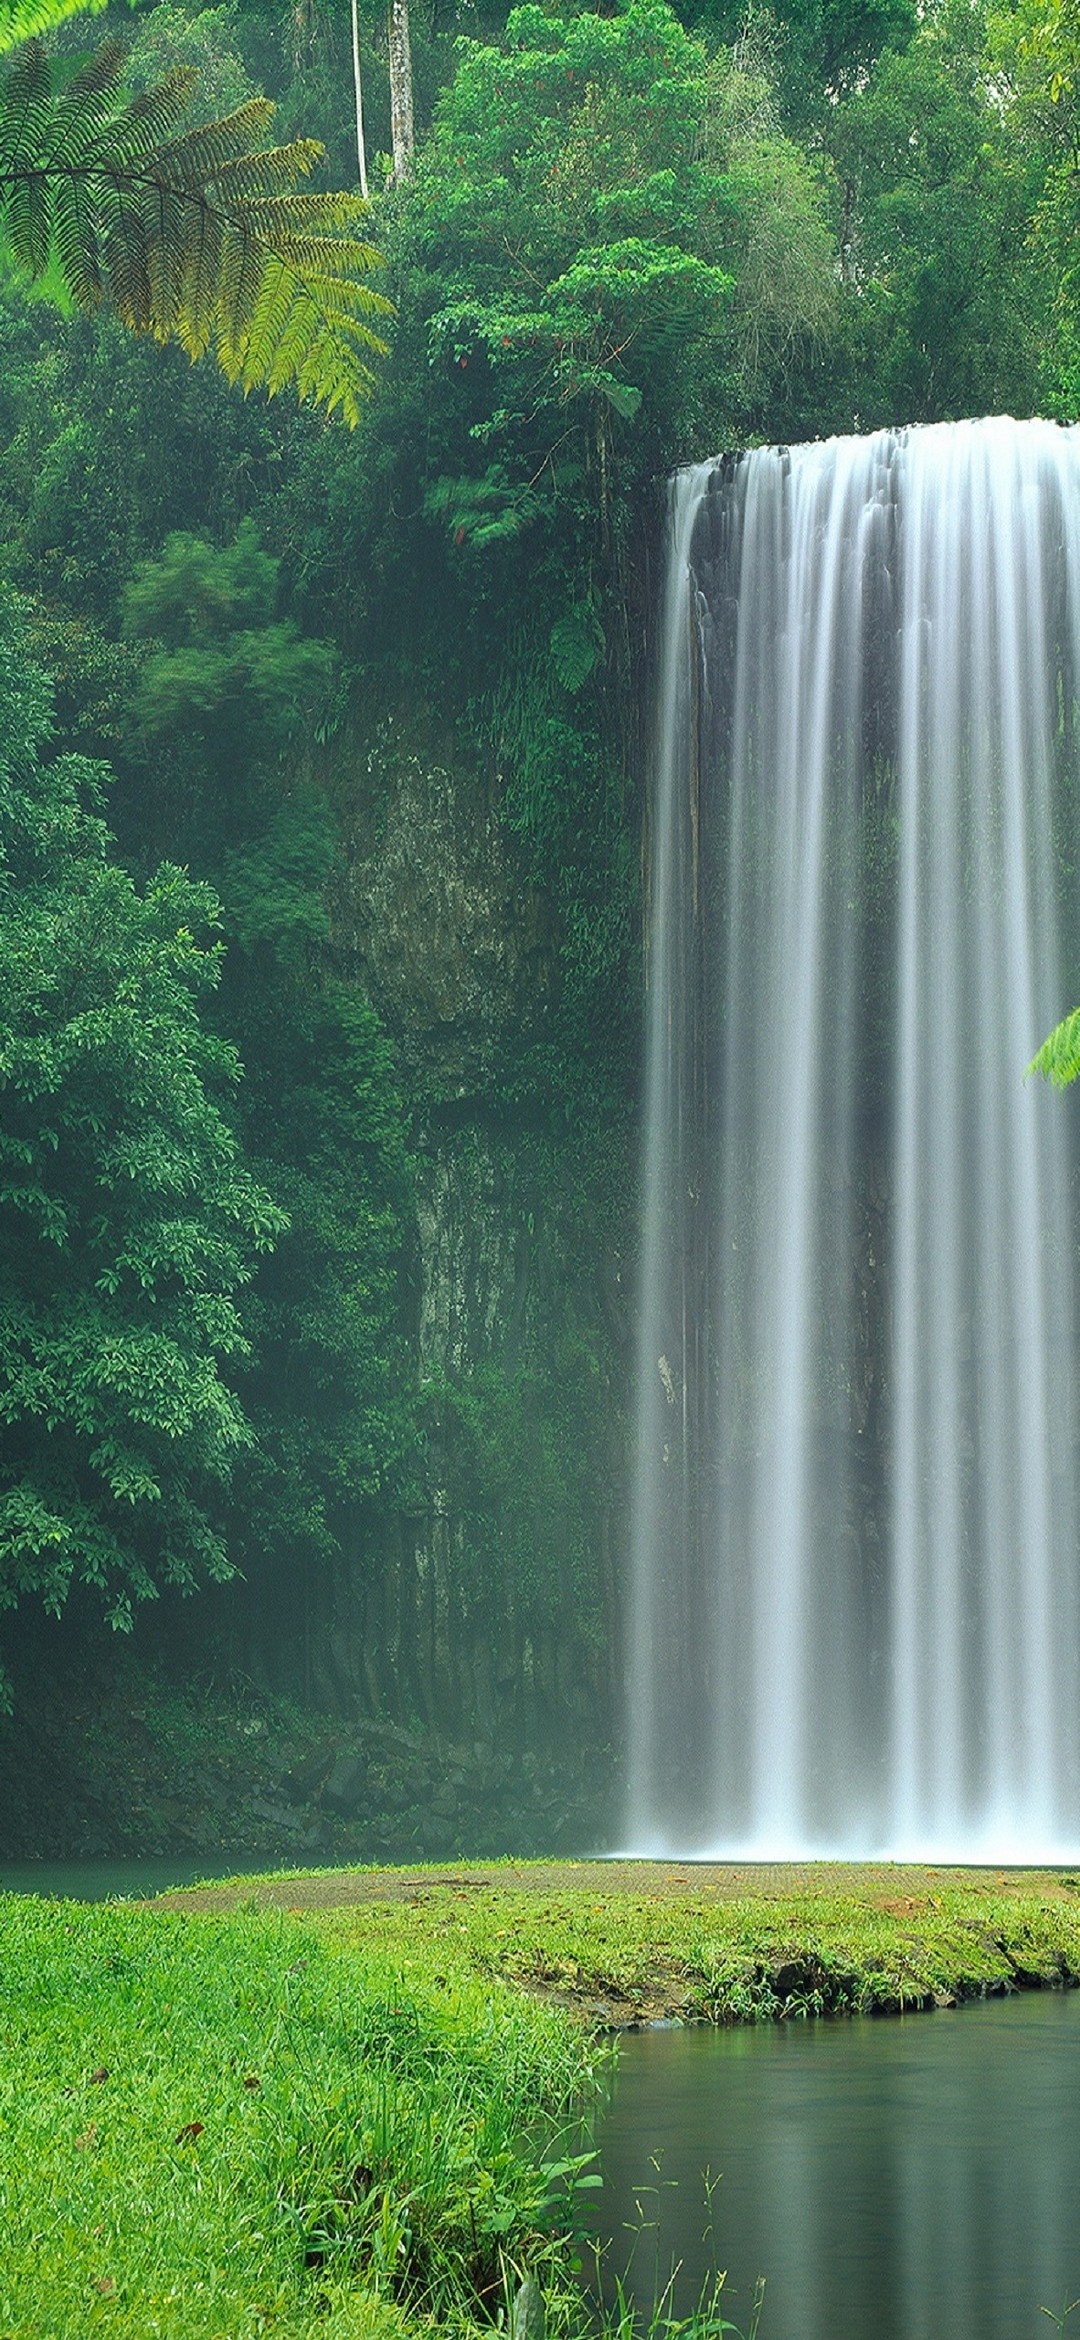 Beautiful Waterfall On The Riverside Redmagic 5 Android スマホ壁紙 待ち受け スマラン